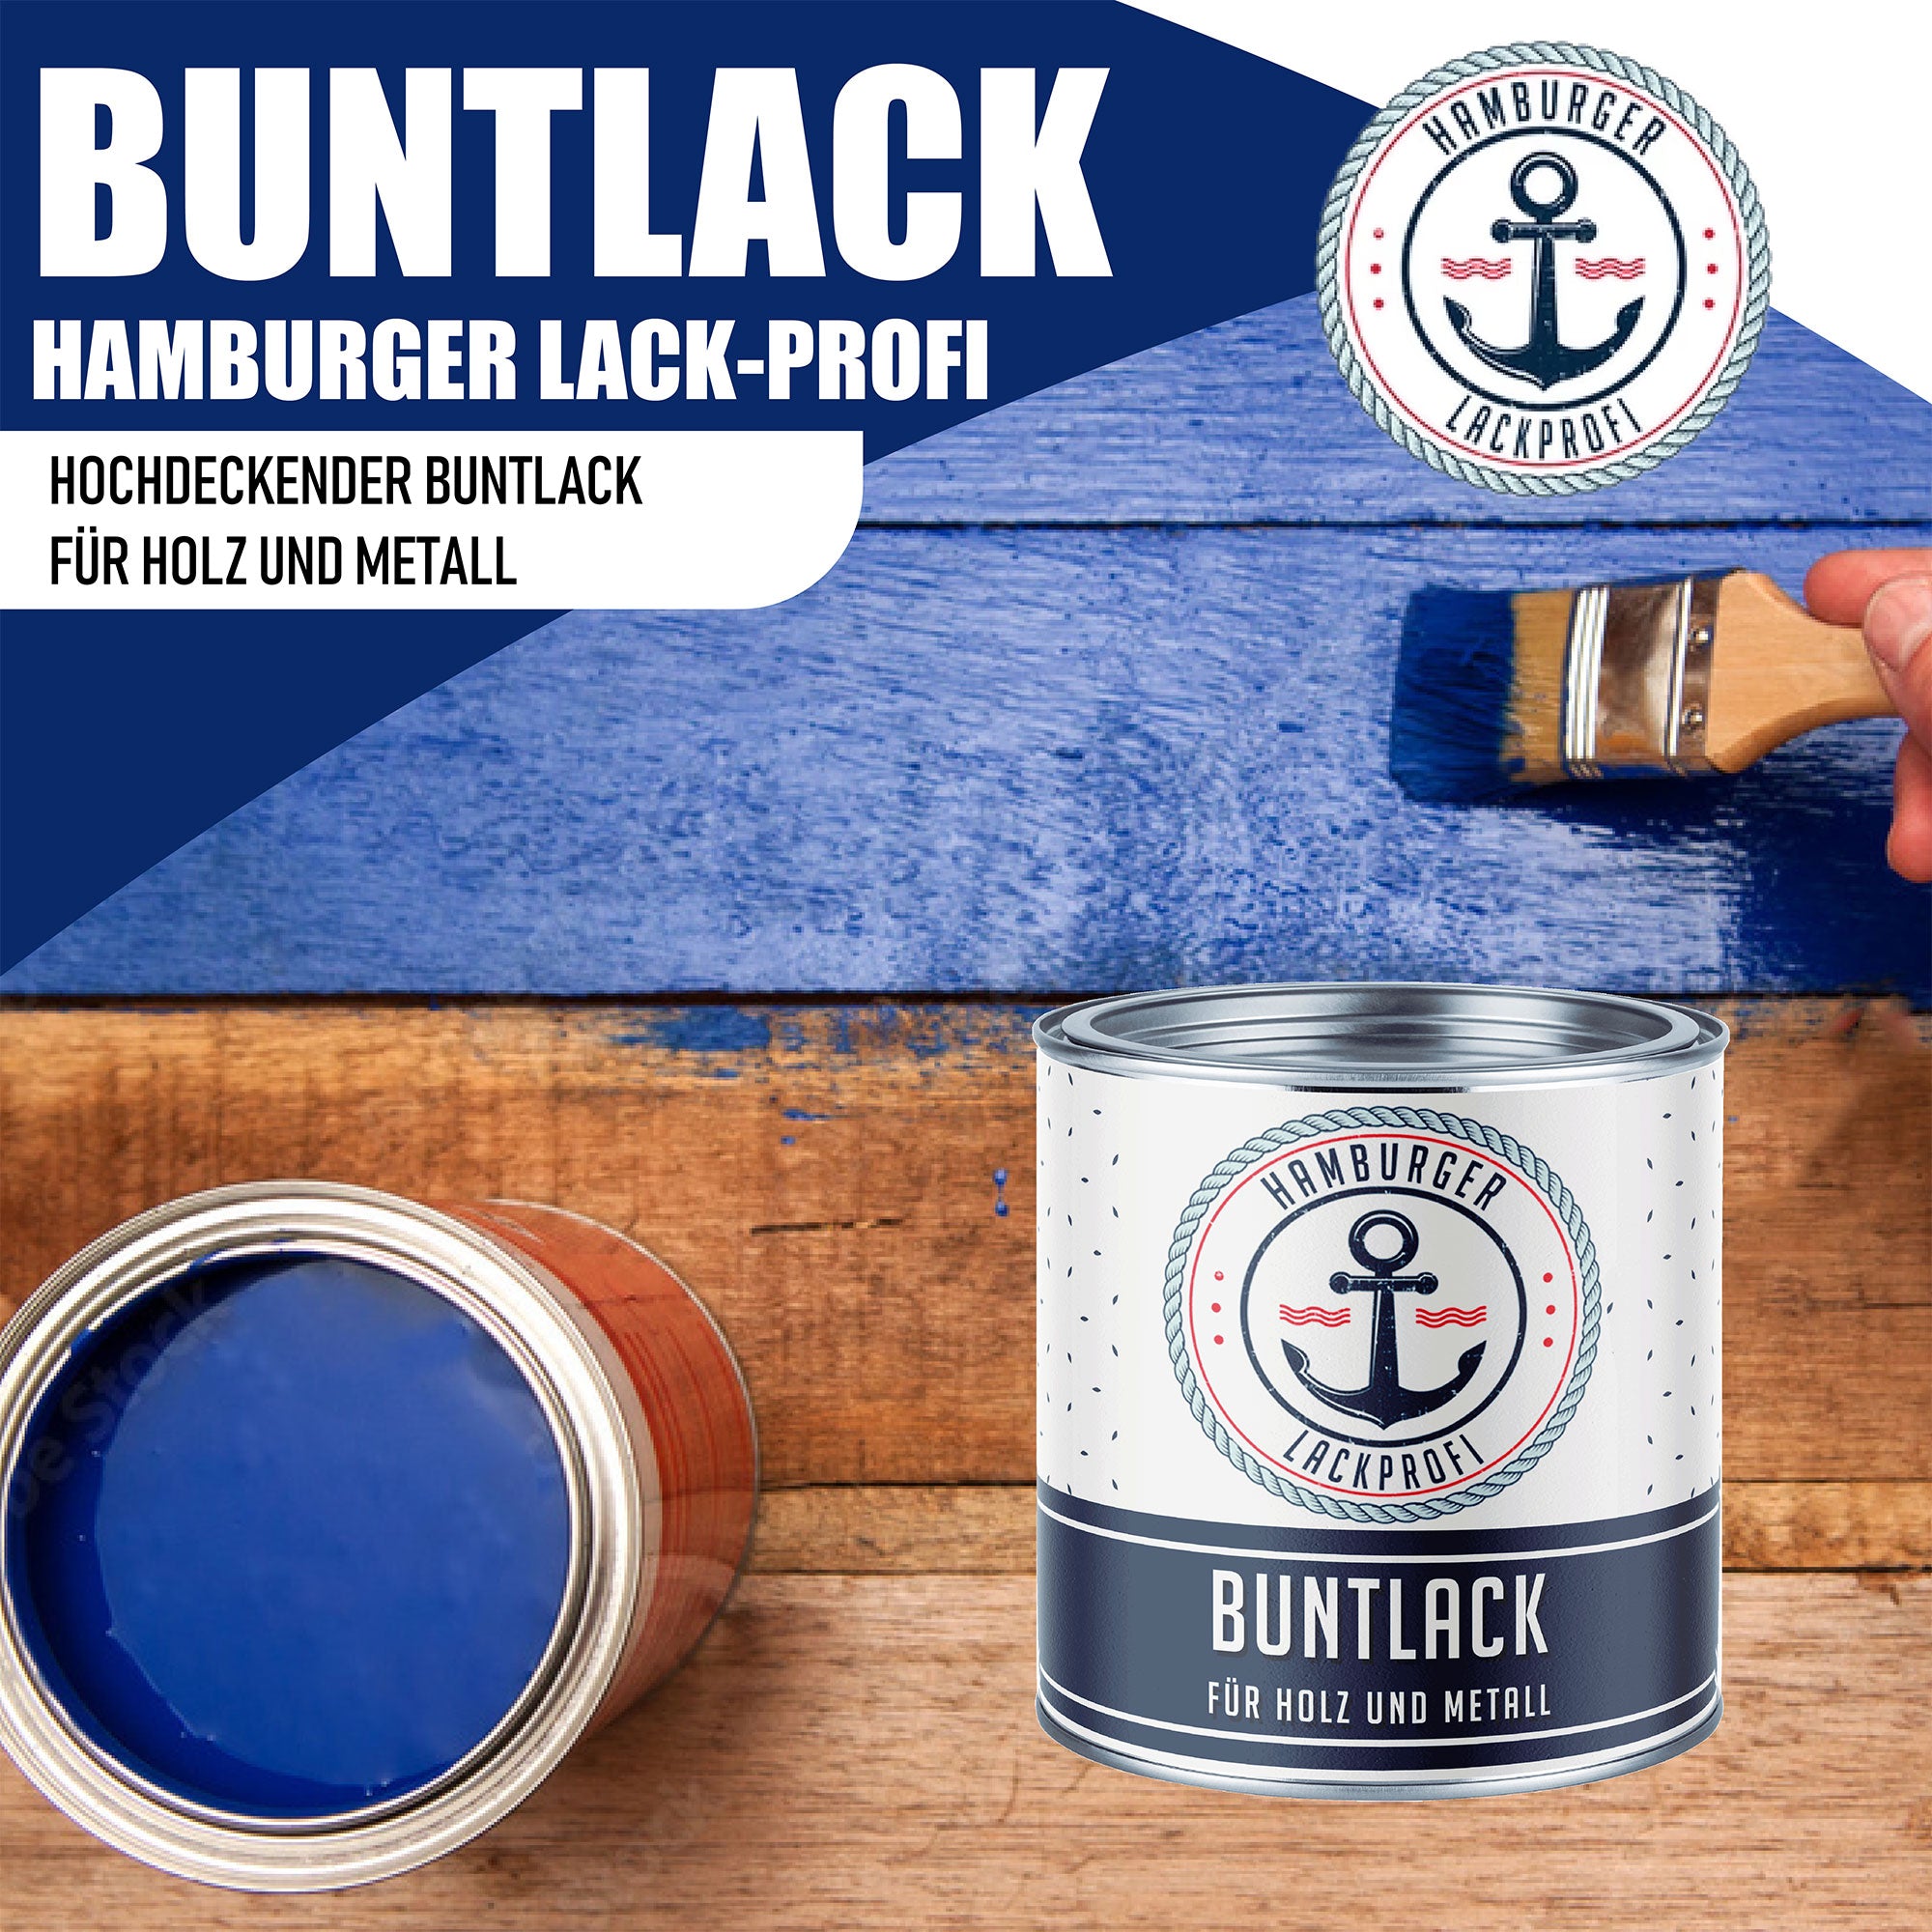 Hamburger Lack-Profi Buntlack Bordeauxviolett RAL 4004 - Robuster Kunstharzlack